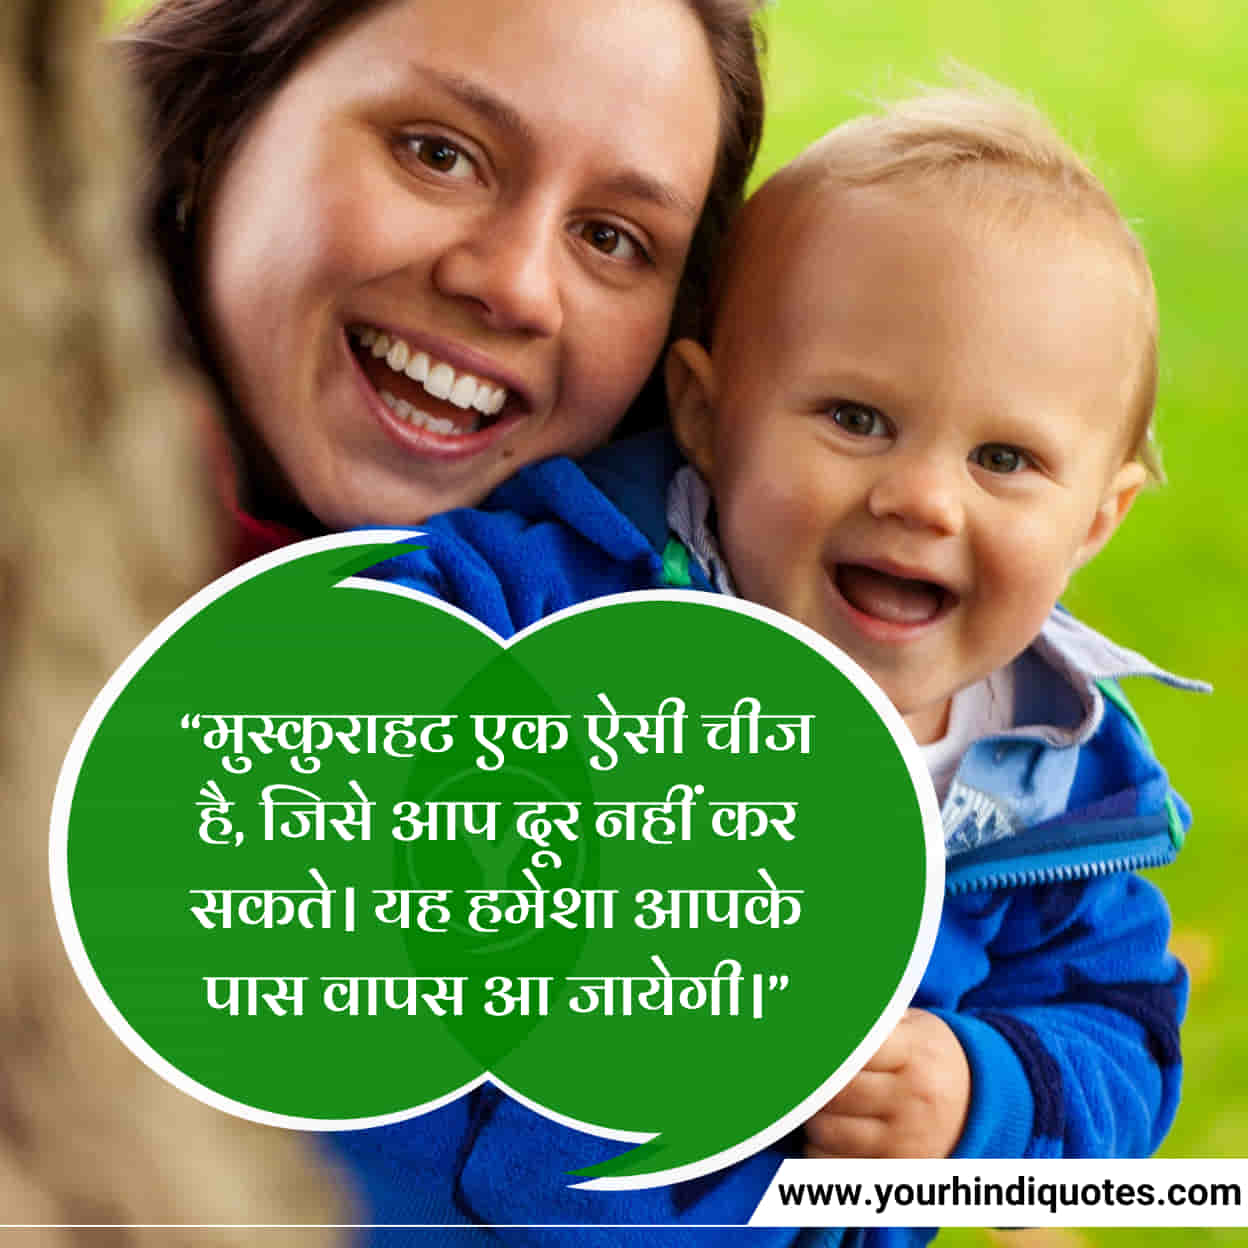 Hindi Beautiful Smile Quotes